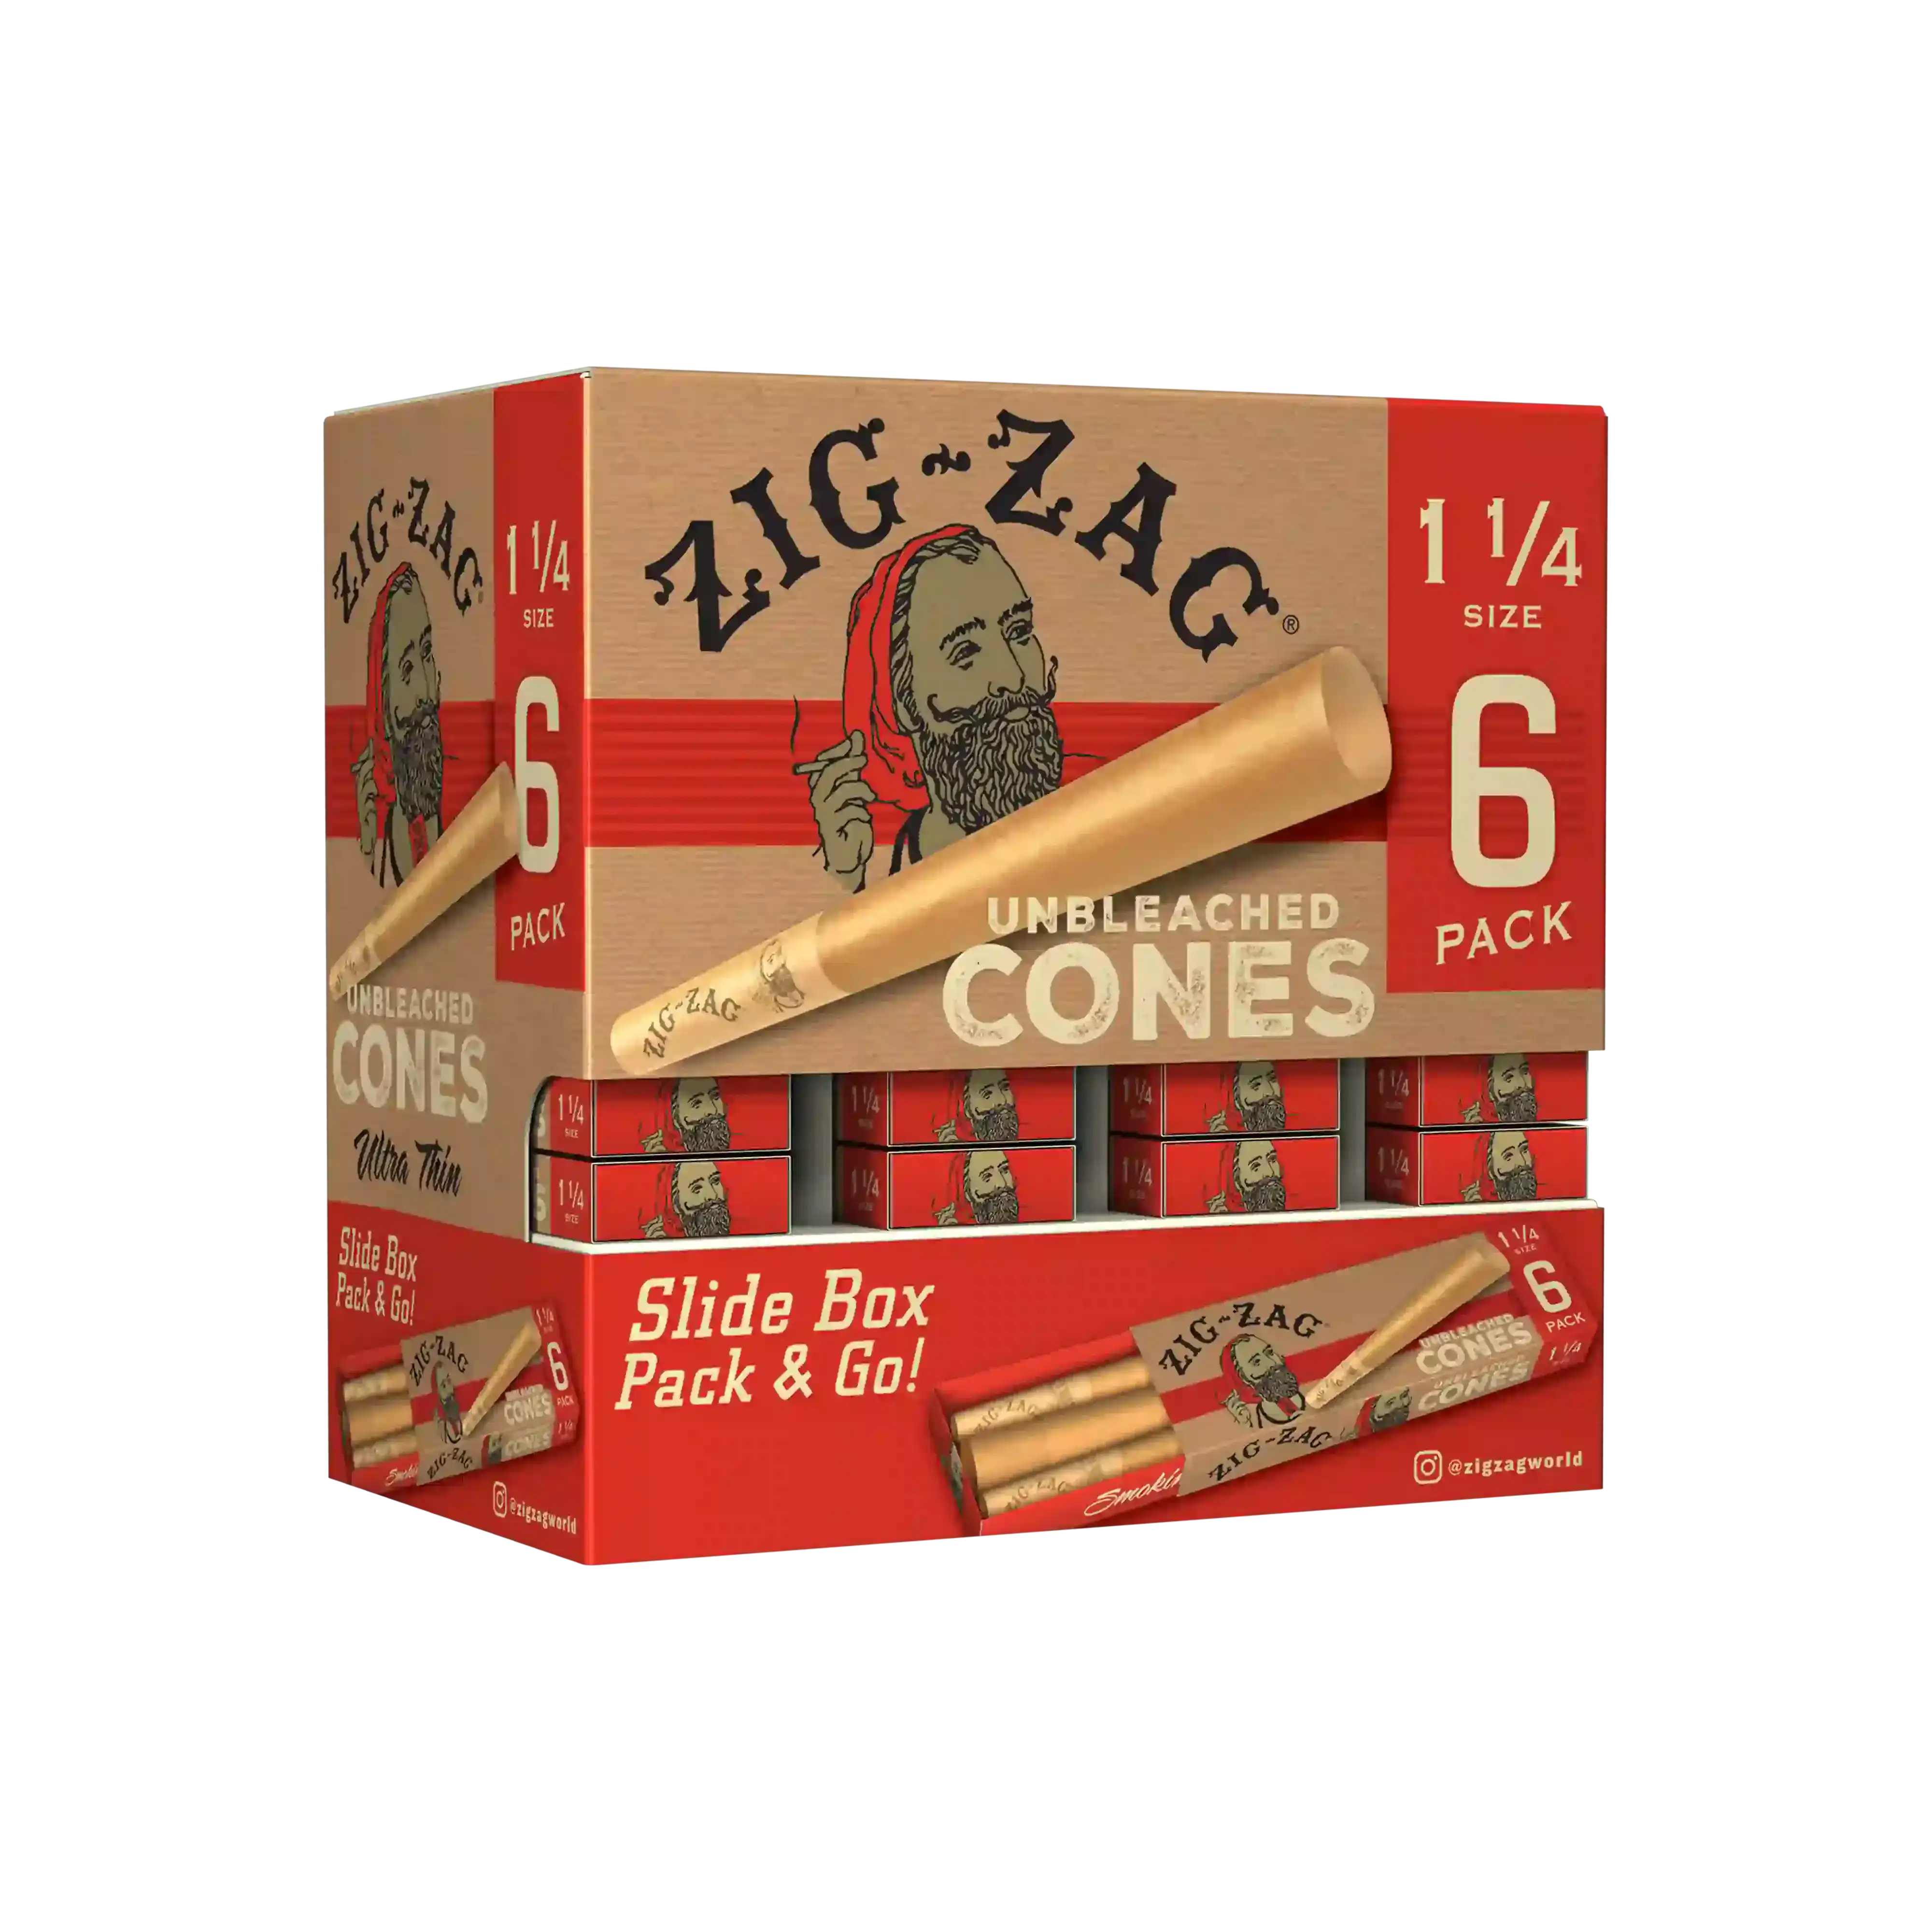 1 1/4 Size - Unbleached Cones Carton